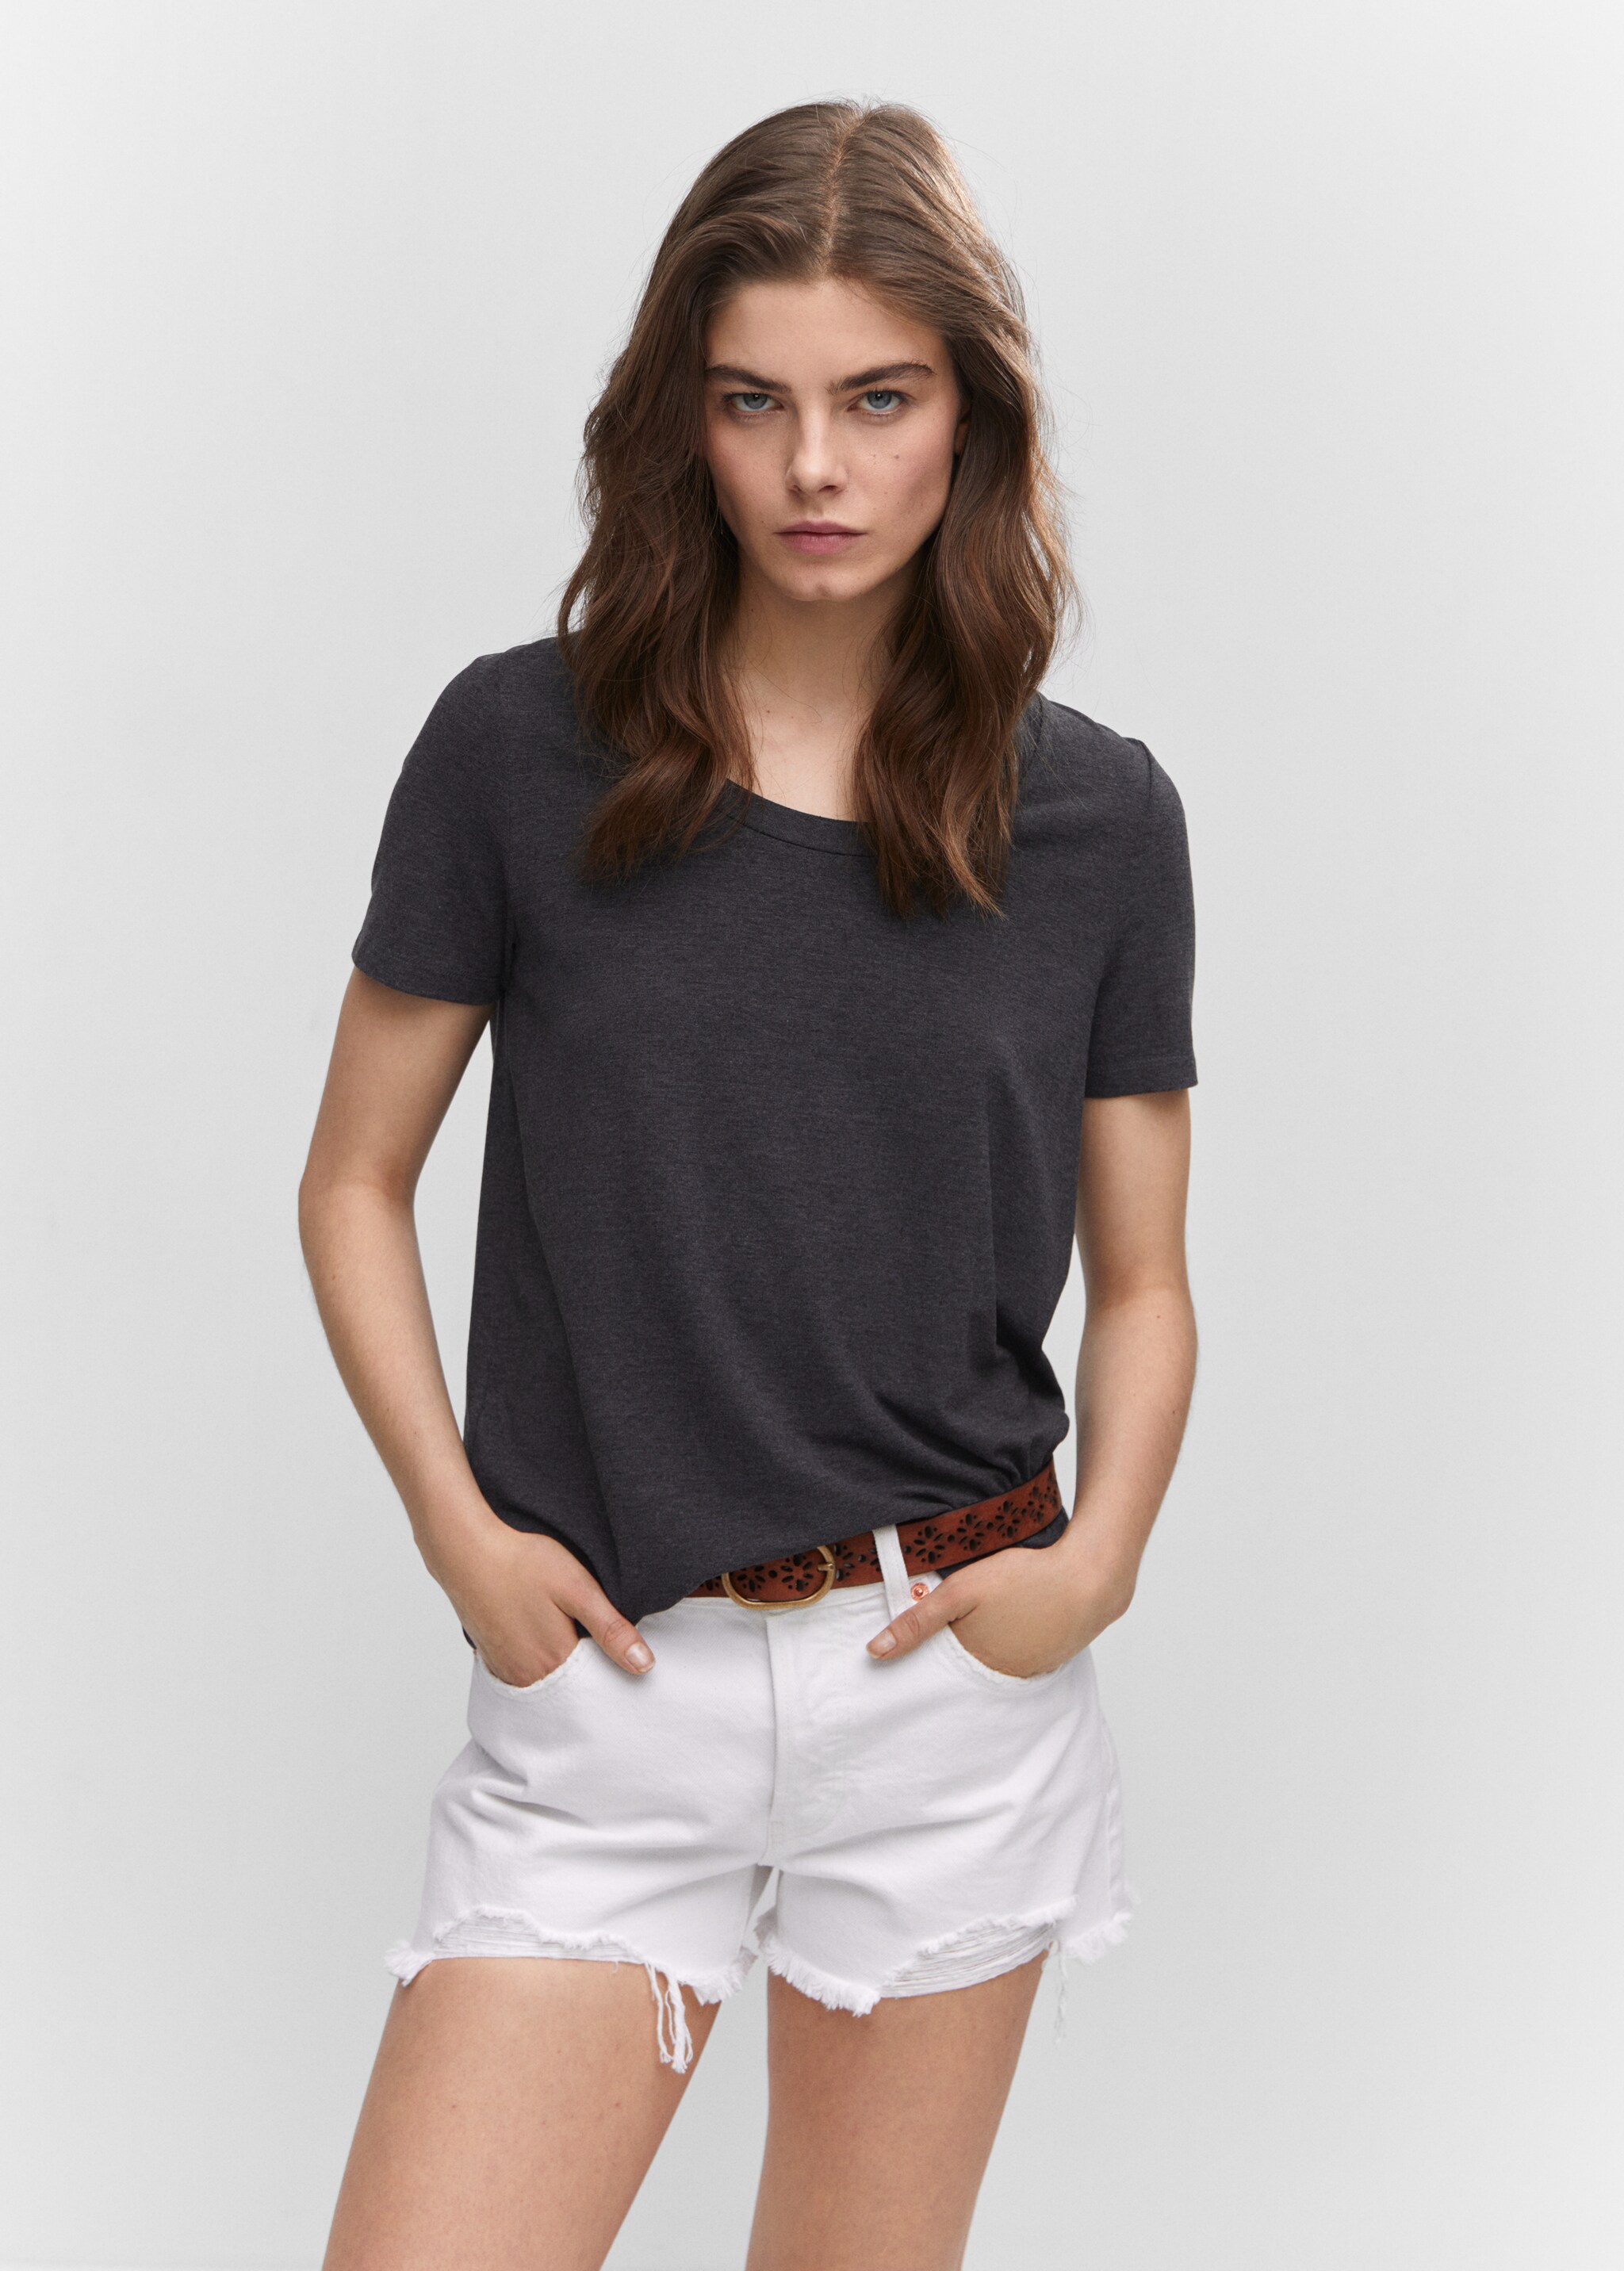 Camiseta manga corta - Plano medio